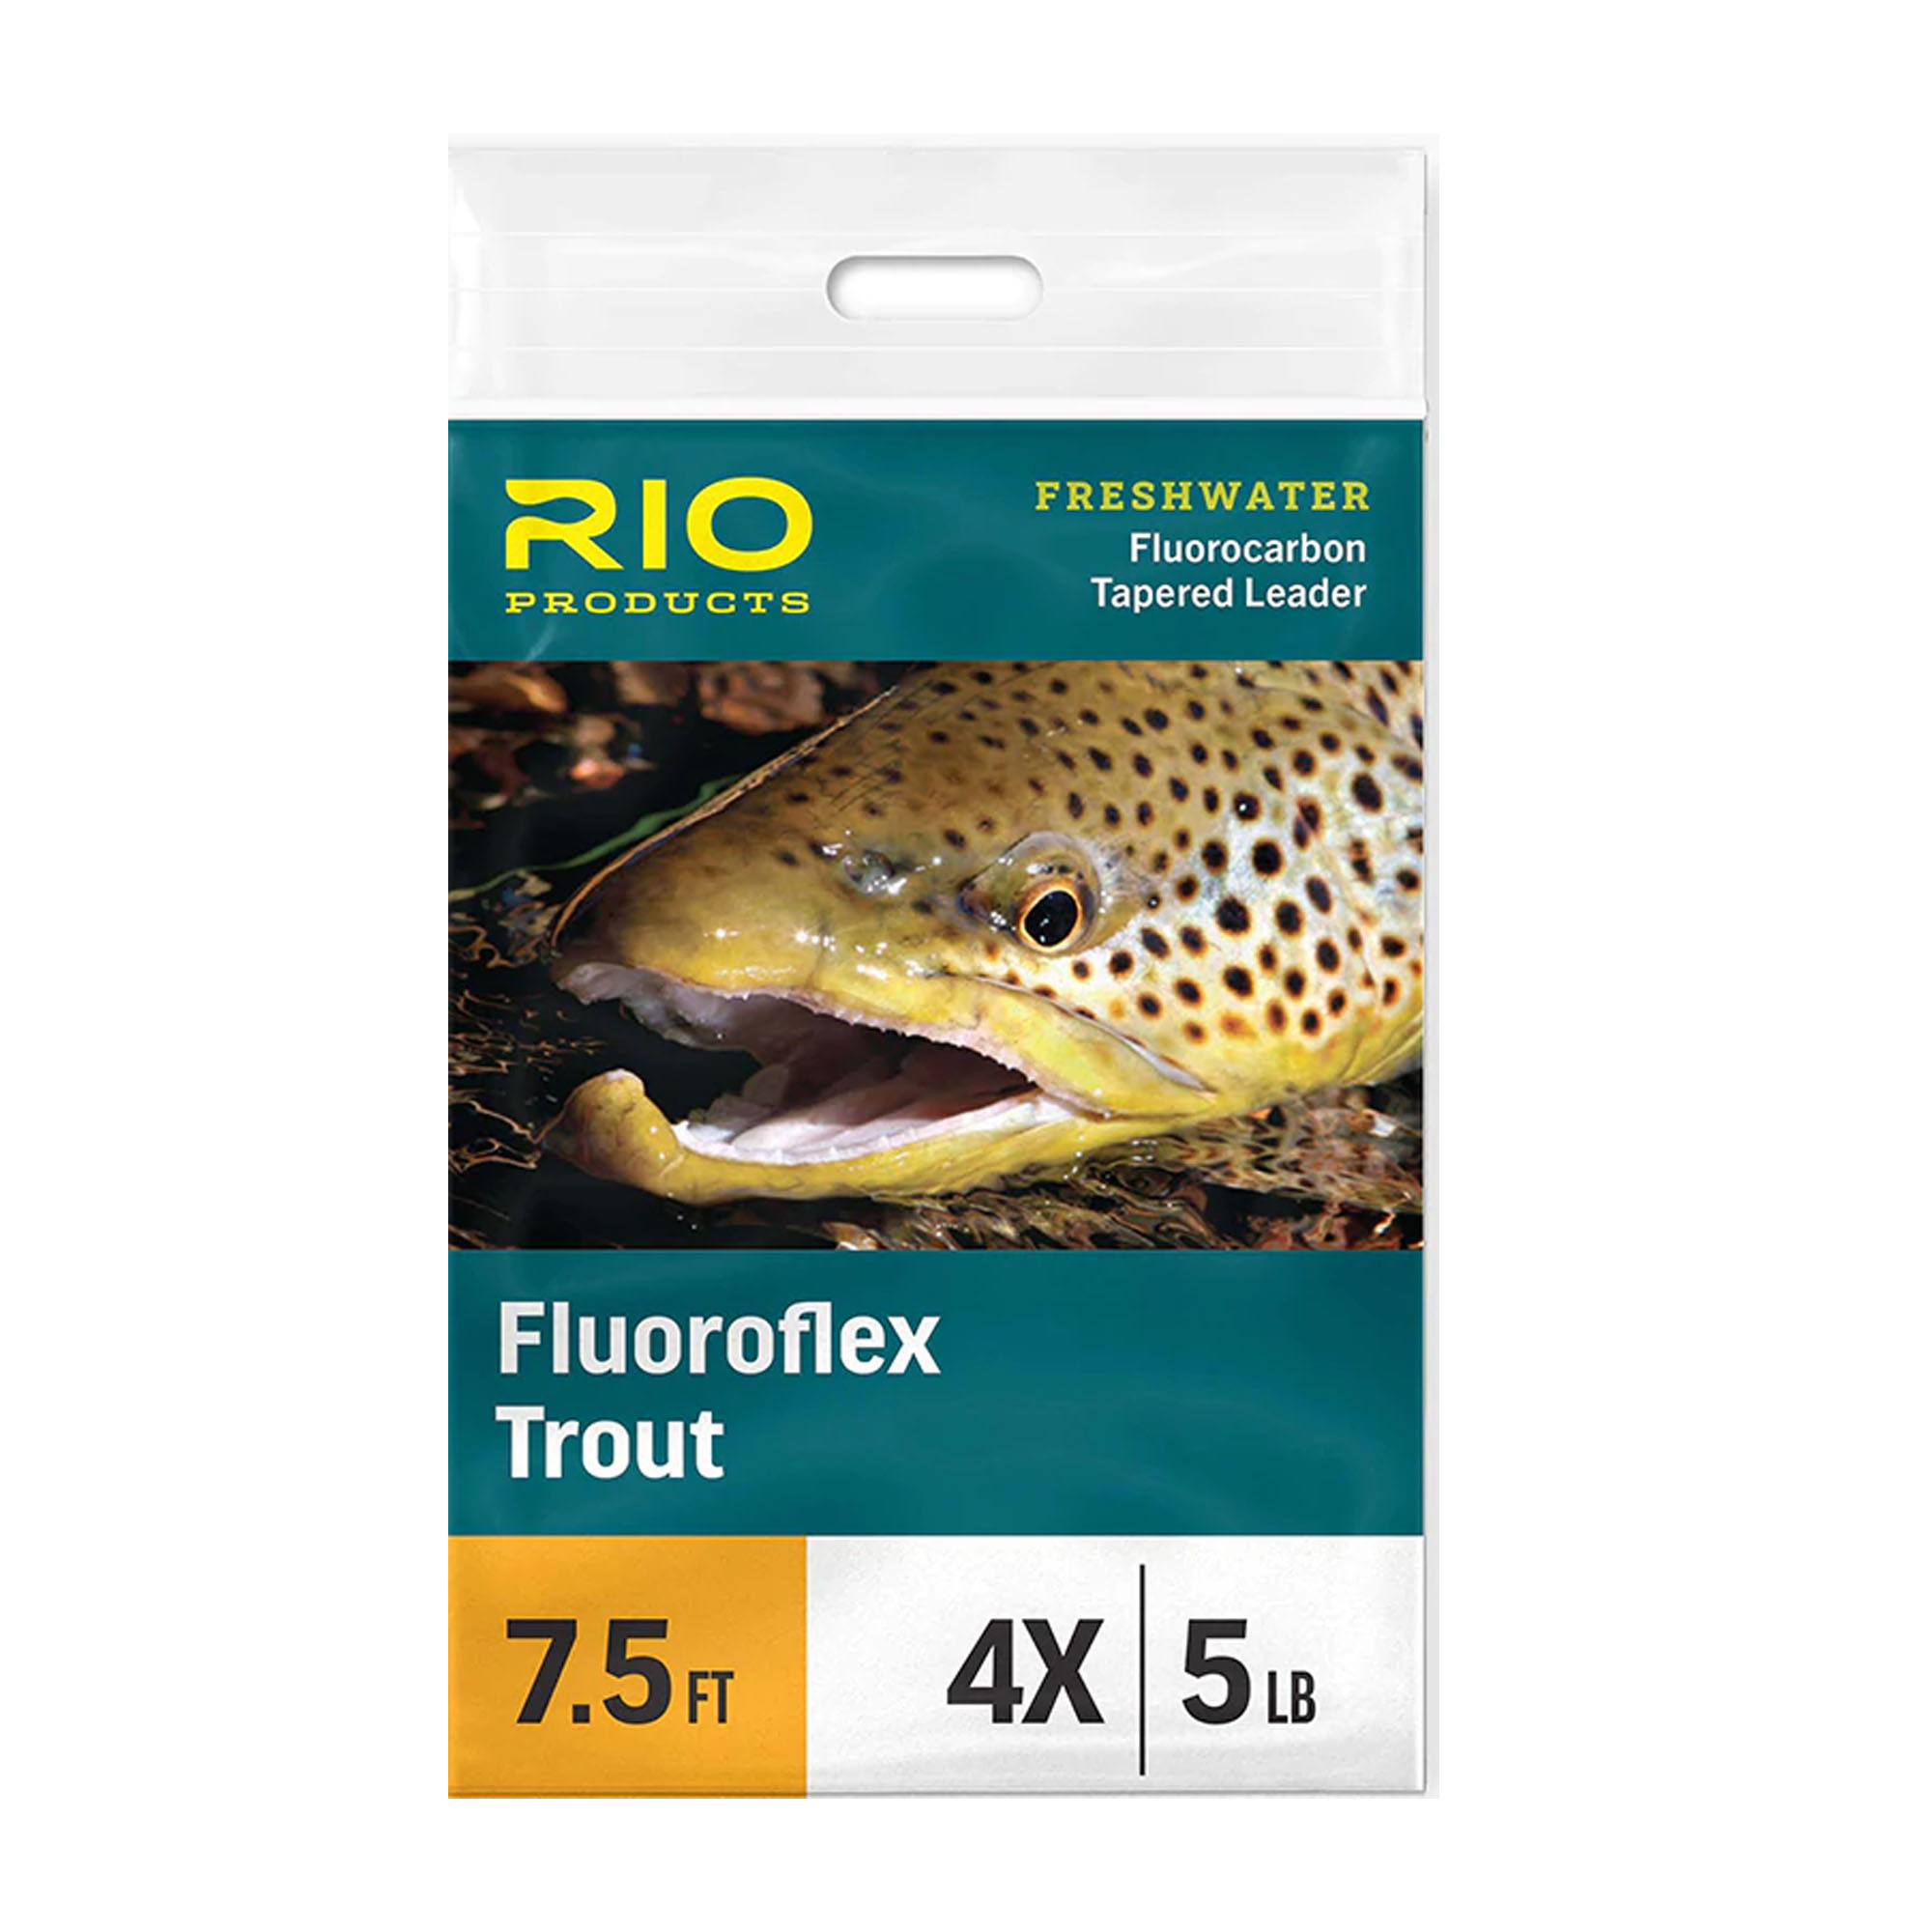 RIO Fluoroflex Trout Leaders – Guide Flyfishing, Fly Fishing Rods, Reels, Sage, Redington, RIO